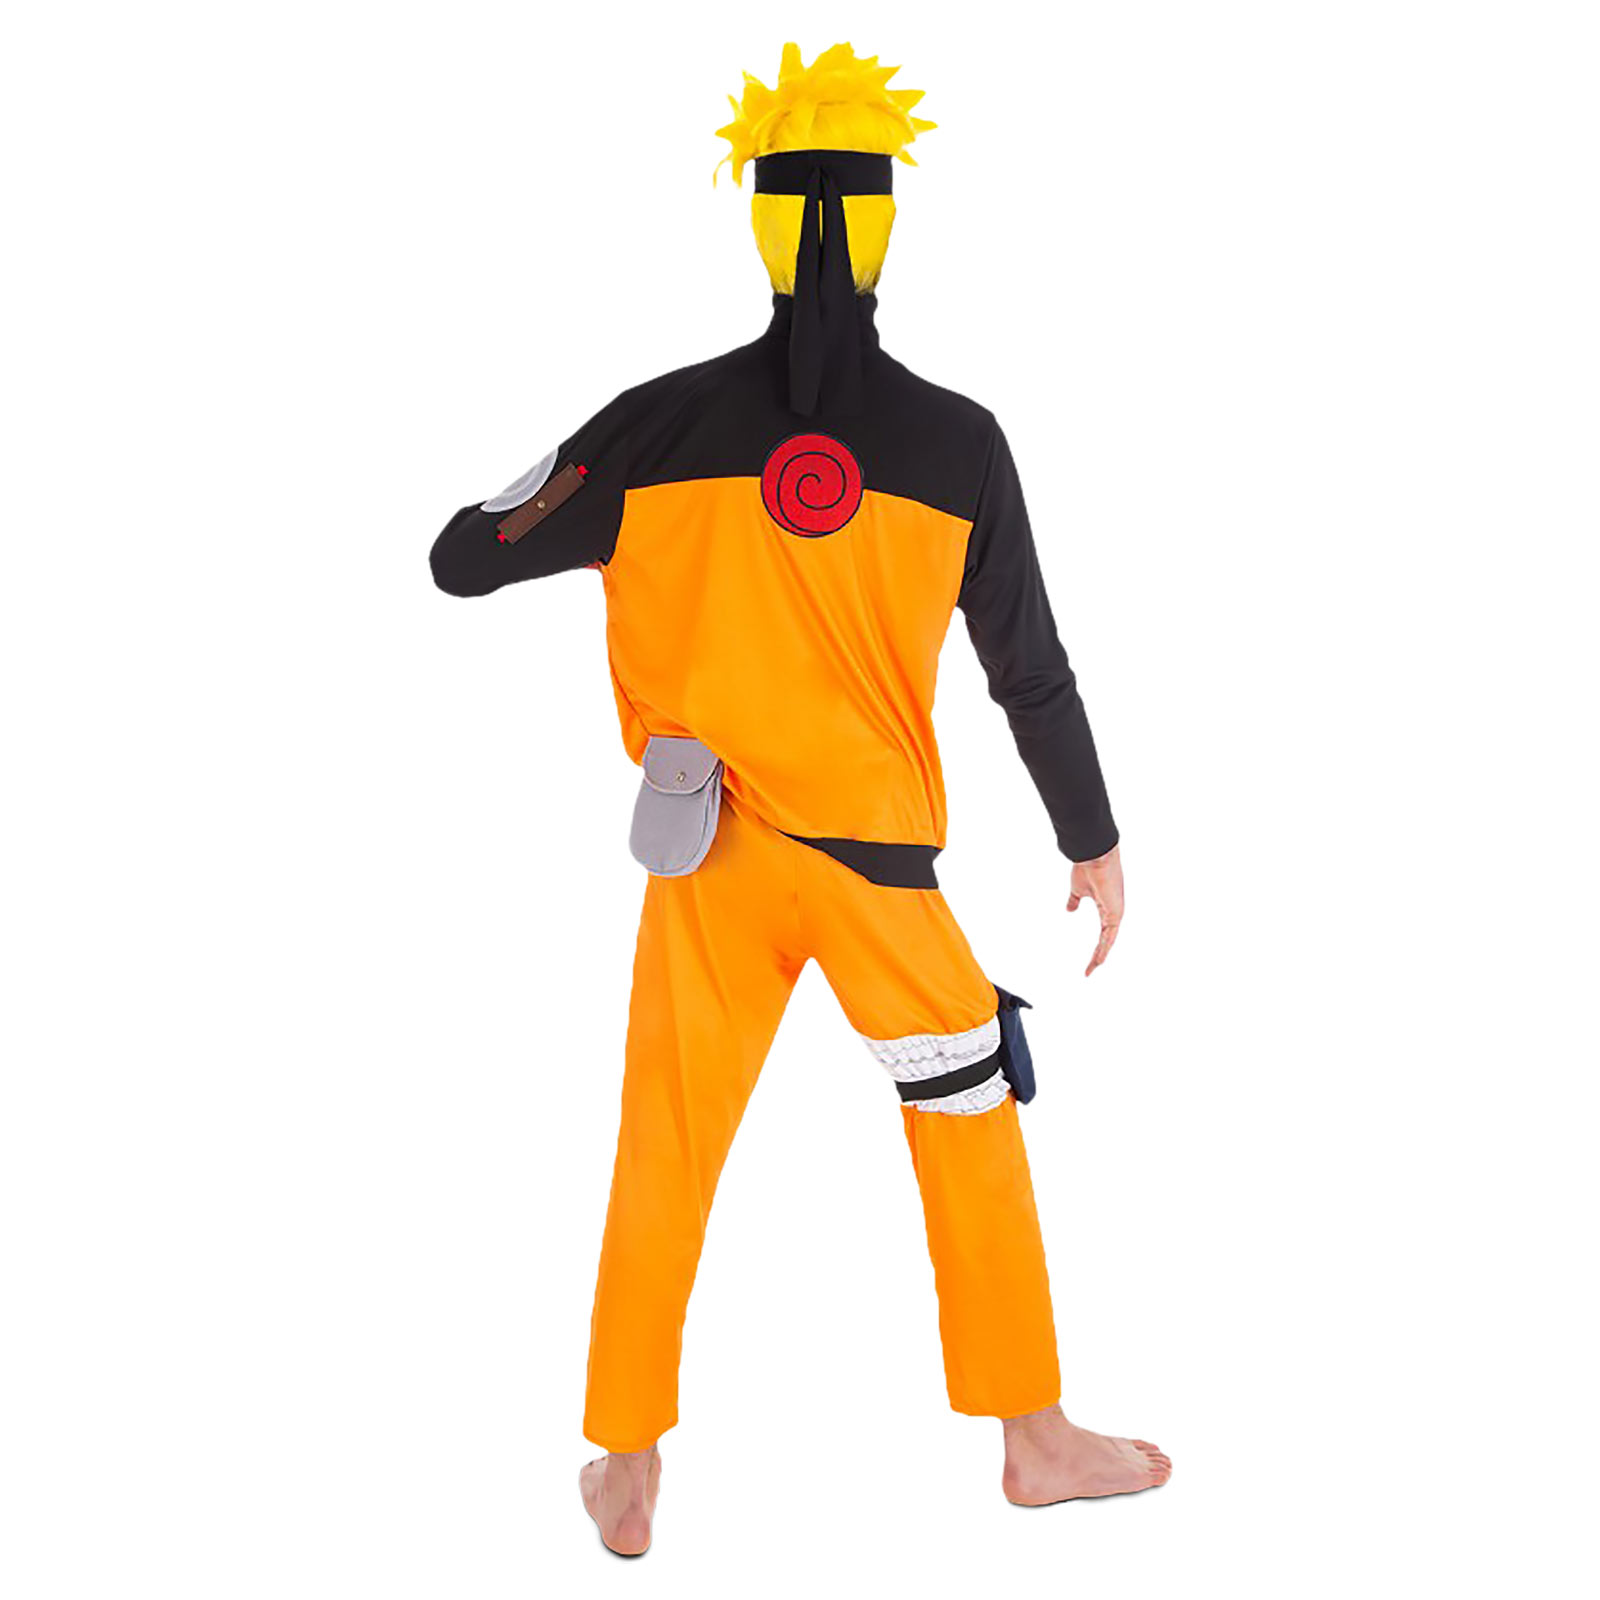 Naruto Uzumaki costume for adults